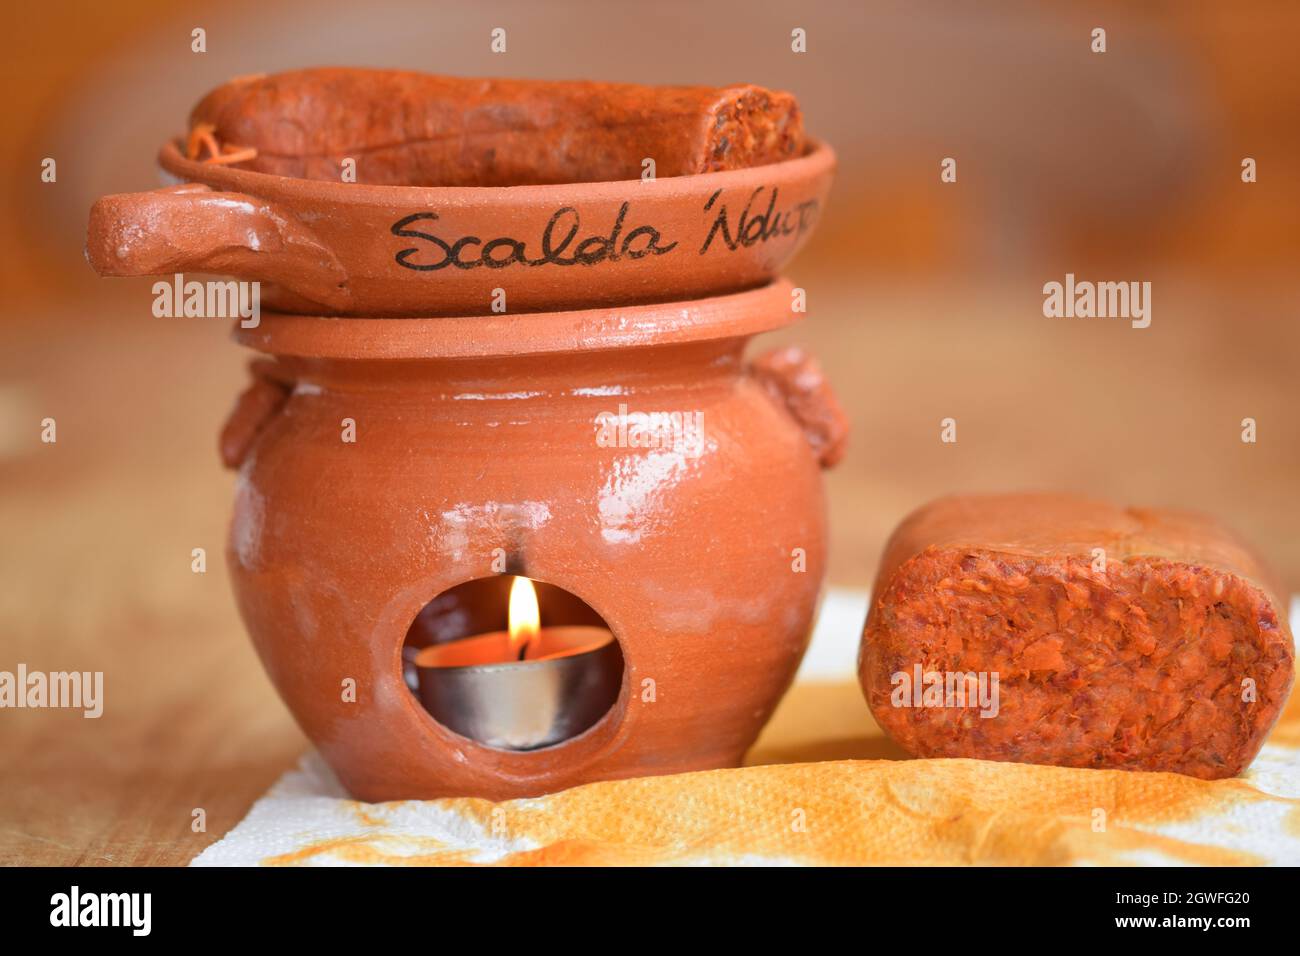 scalda nduja terracotta tool to heat and make the nduja